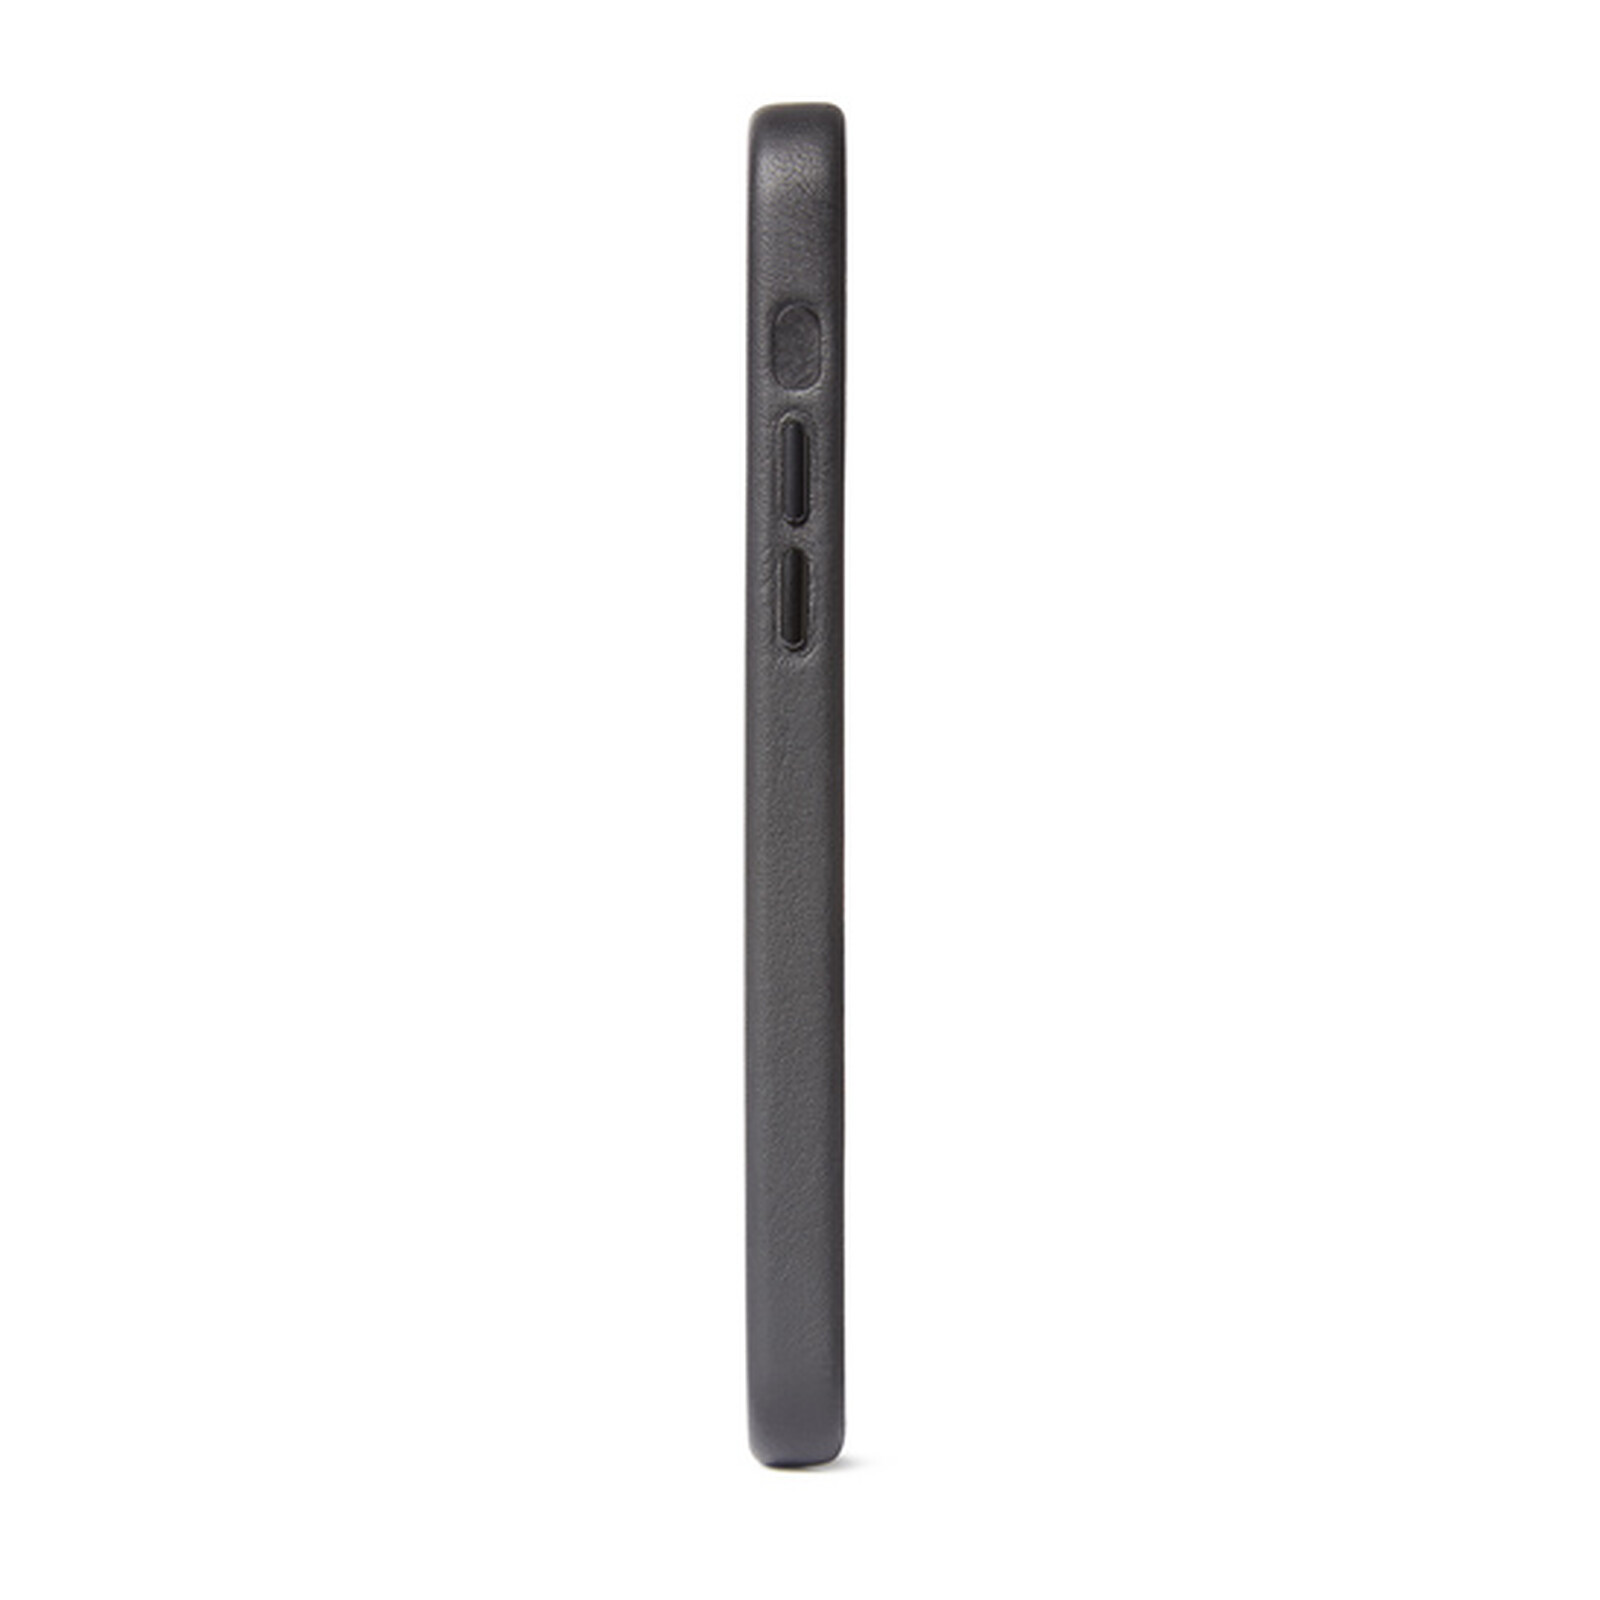 PanzerGlass Edge to Edge - Apple iPhone 12 Mini Verre trempé